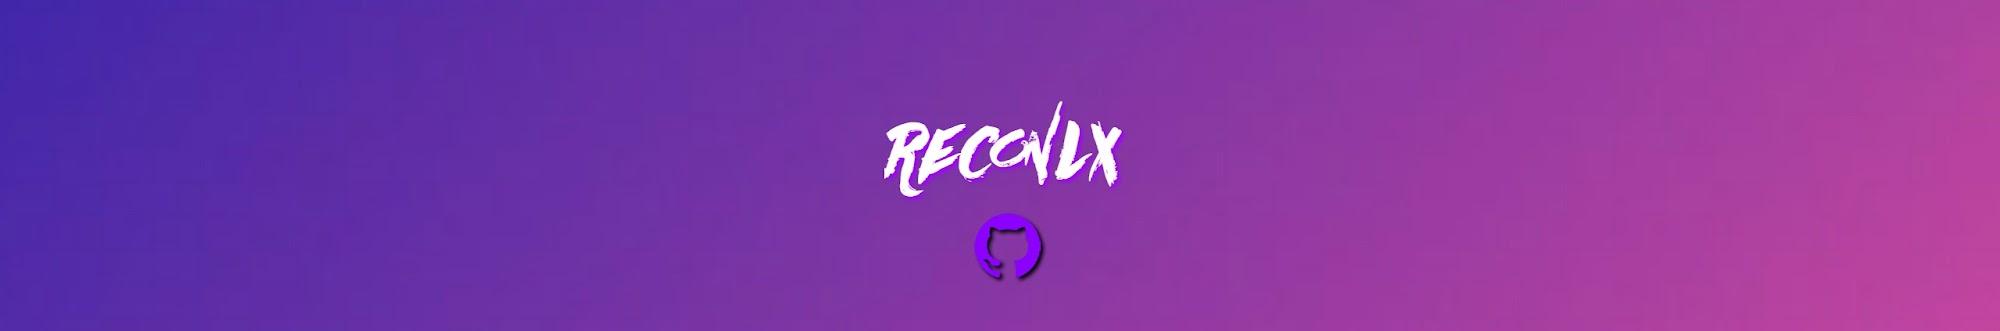 reconlx